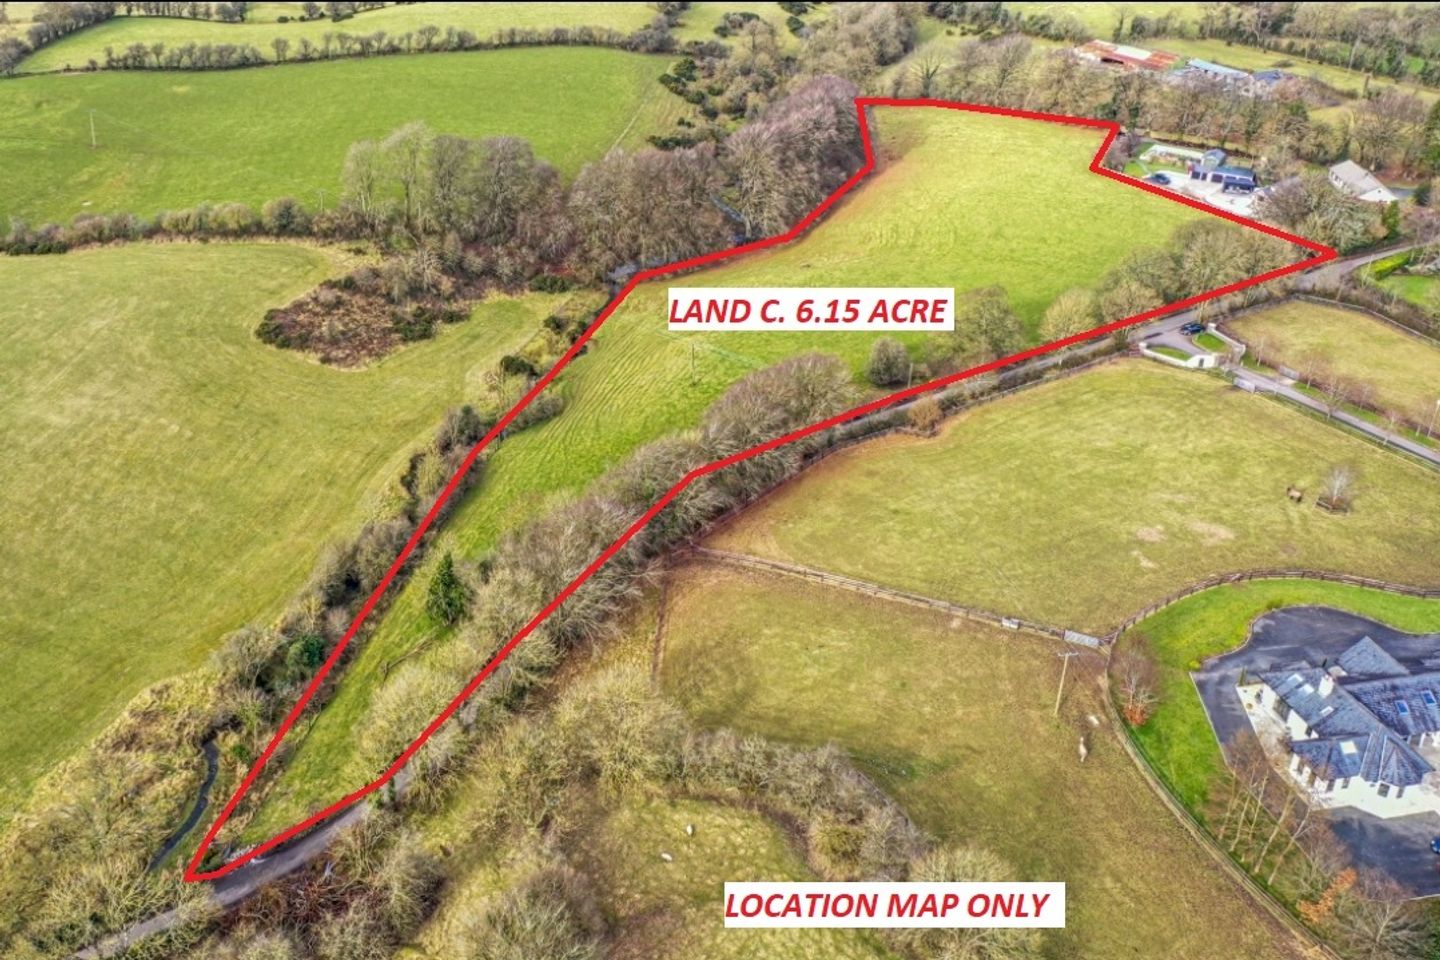 Land c. 6.15 Acres / 2.5 HA., Broadlease Commons, Ballymore Eustace, Co. Kildare